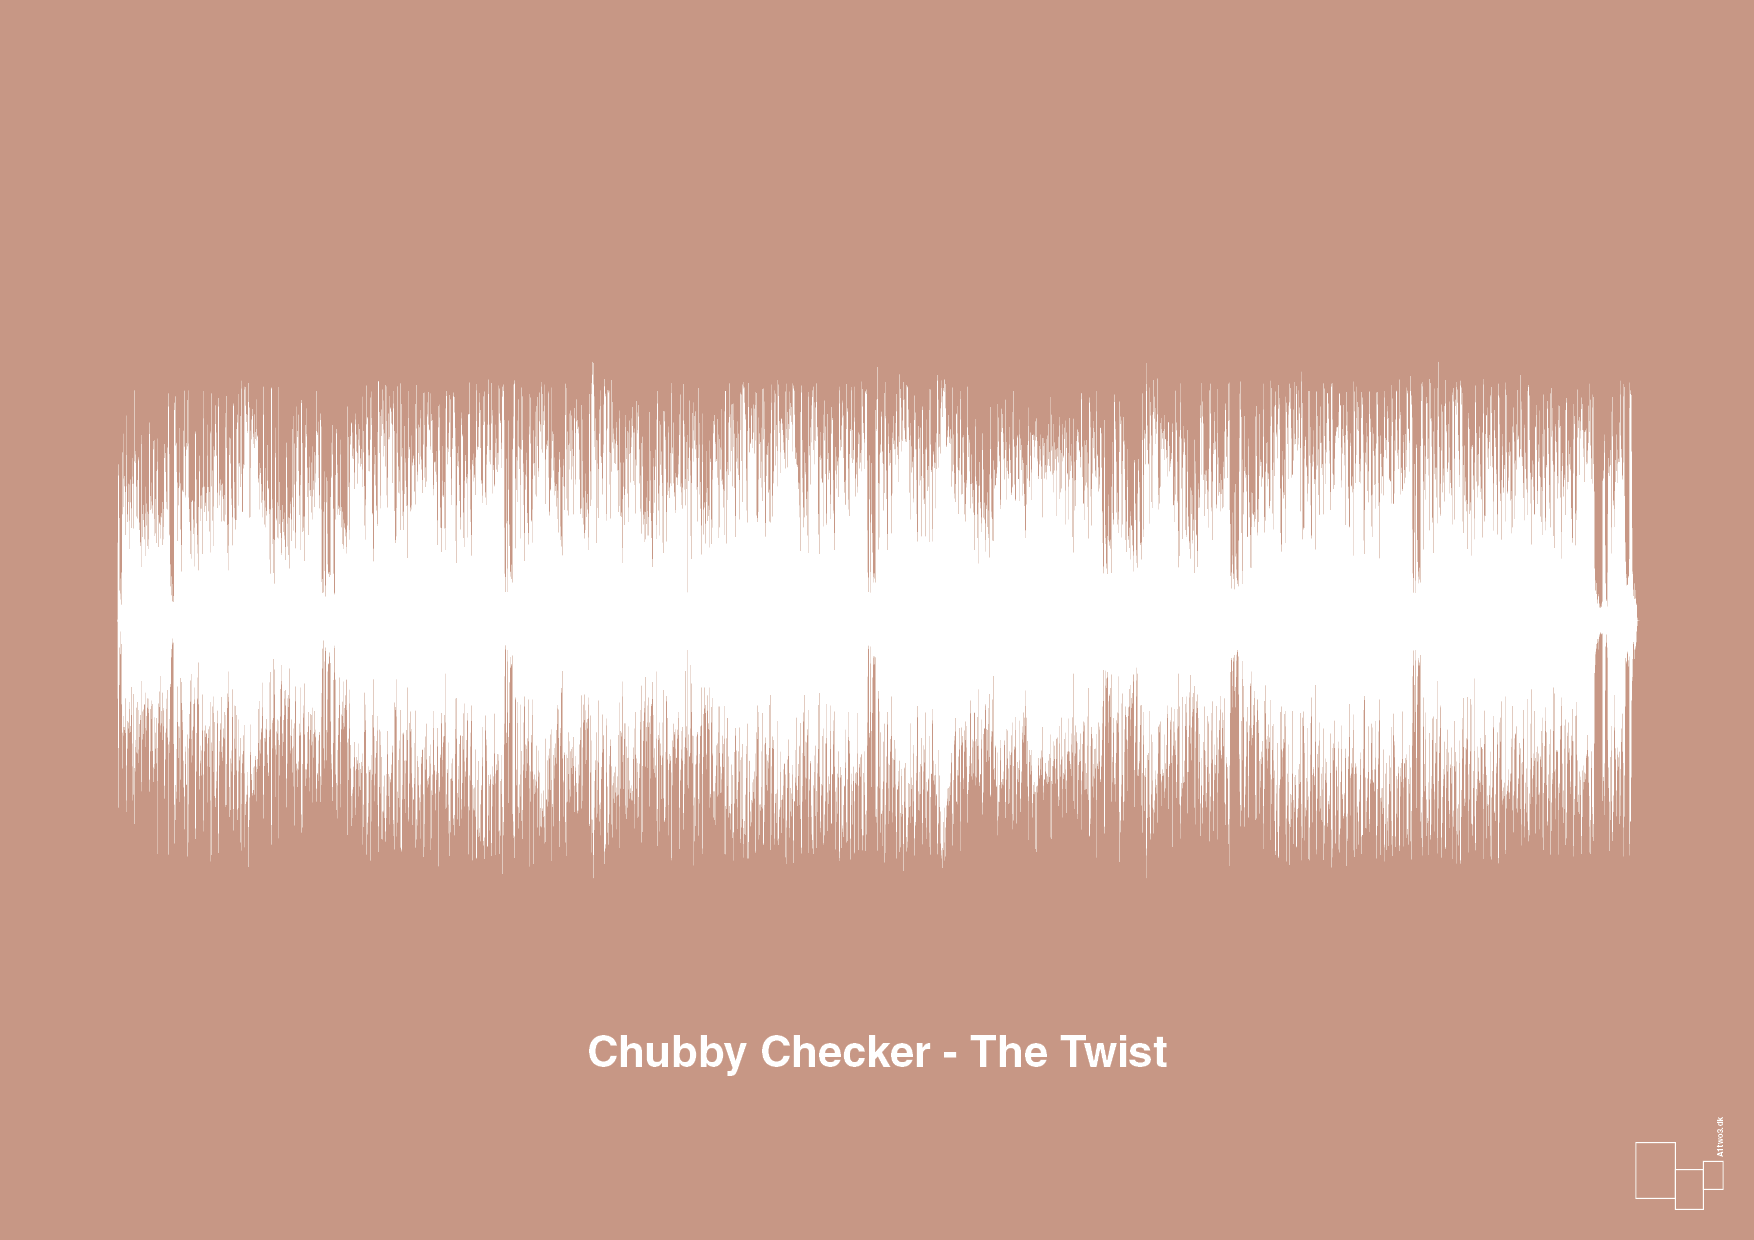 chubby checker - the twist - Plakat med Musik i Powder